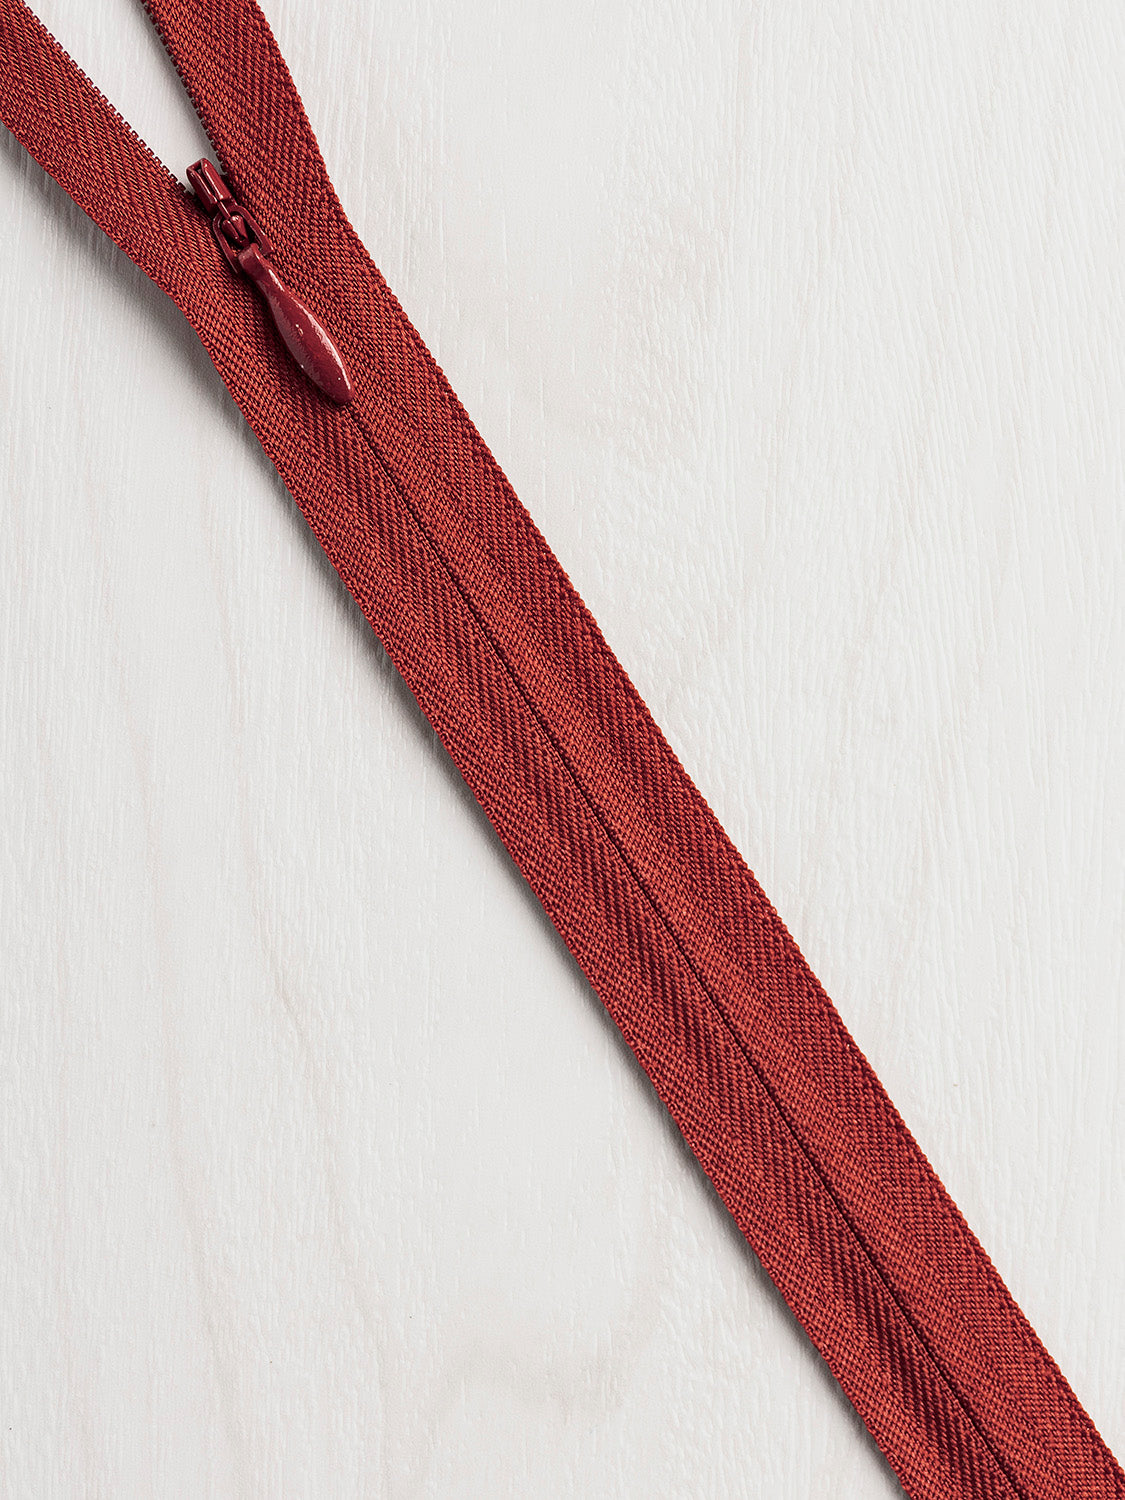 YKK Zipper Original Japanese Deep Red Cotton Body Closed End/ 